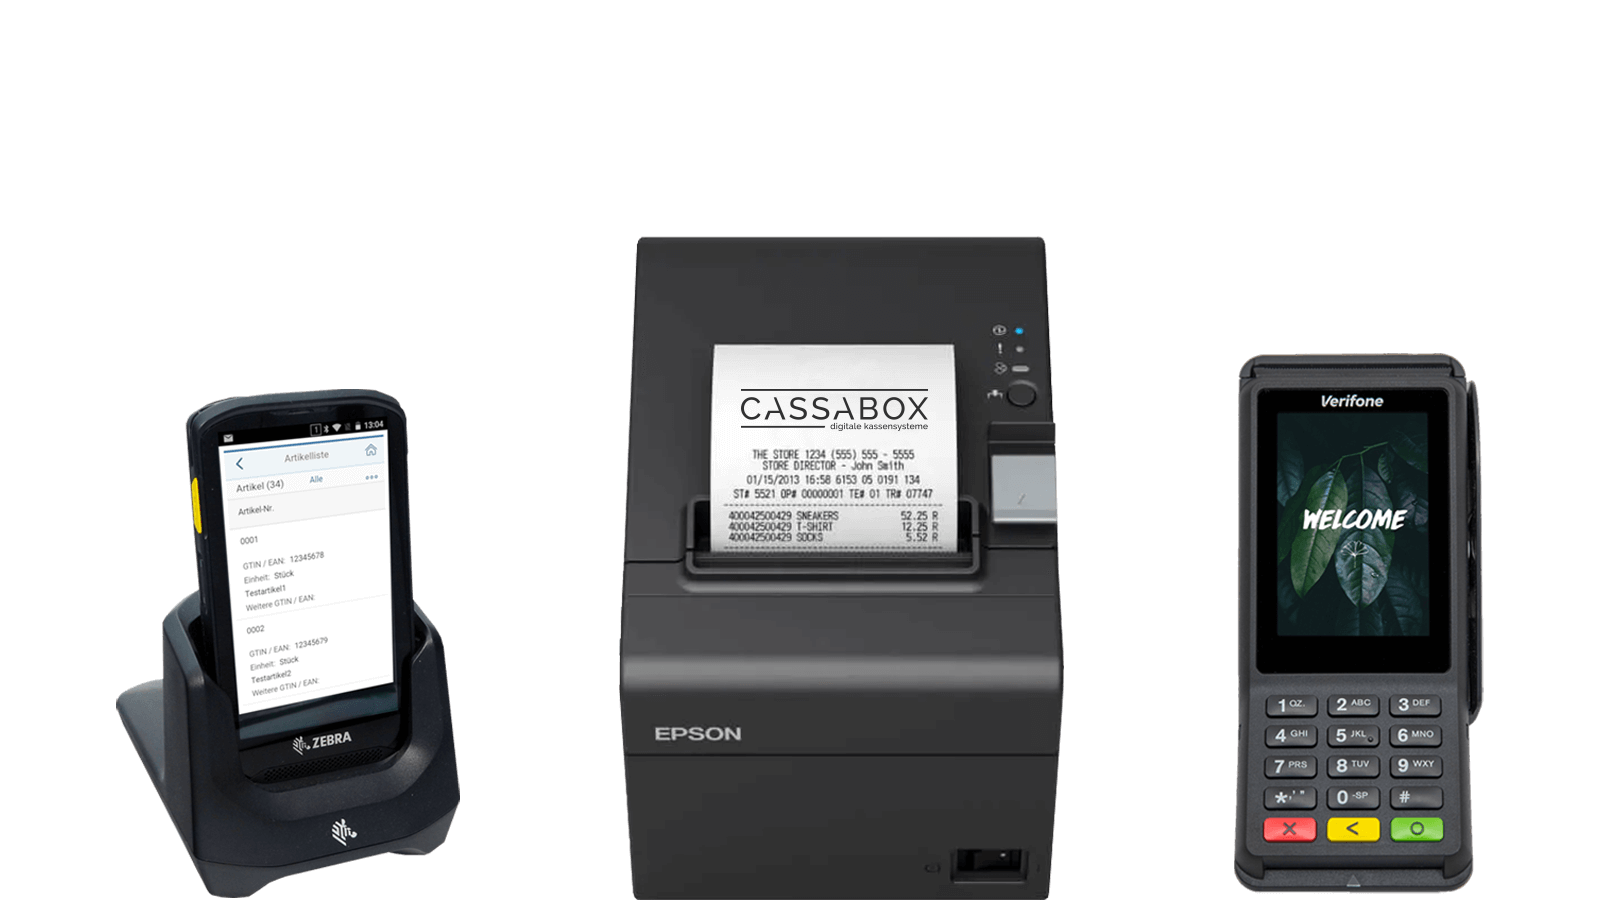 CASSABOX Geräte, Zebra, Bondrucker und EC-Cash Gerät